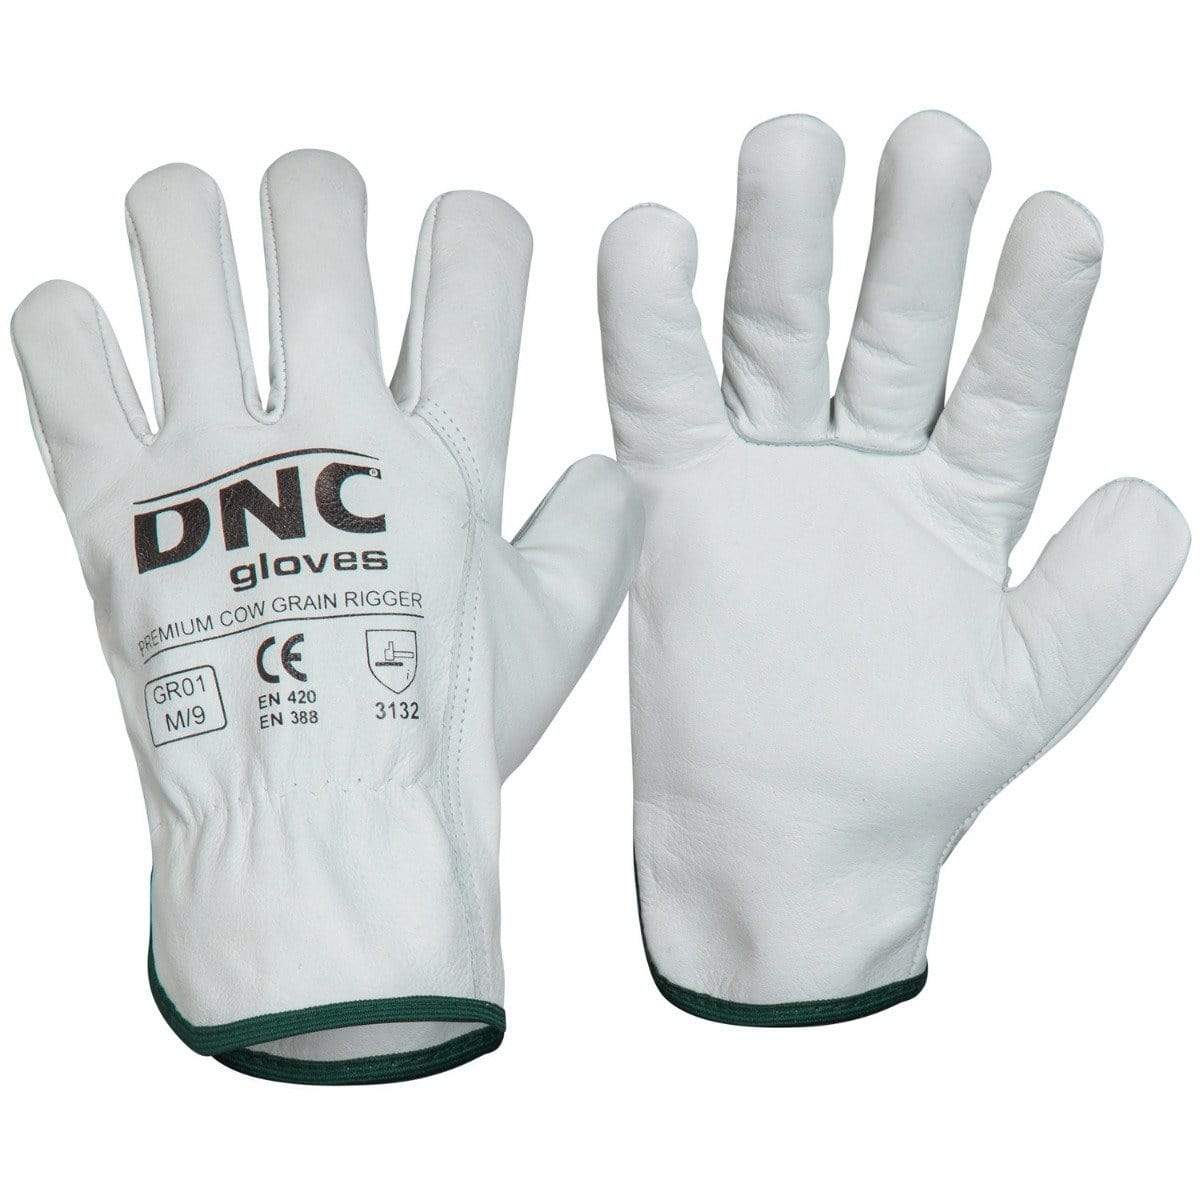 Dnc Workwear Premium Cow Grain Rigger - GR01 PPE DNC Workwear Natural S/7 